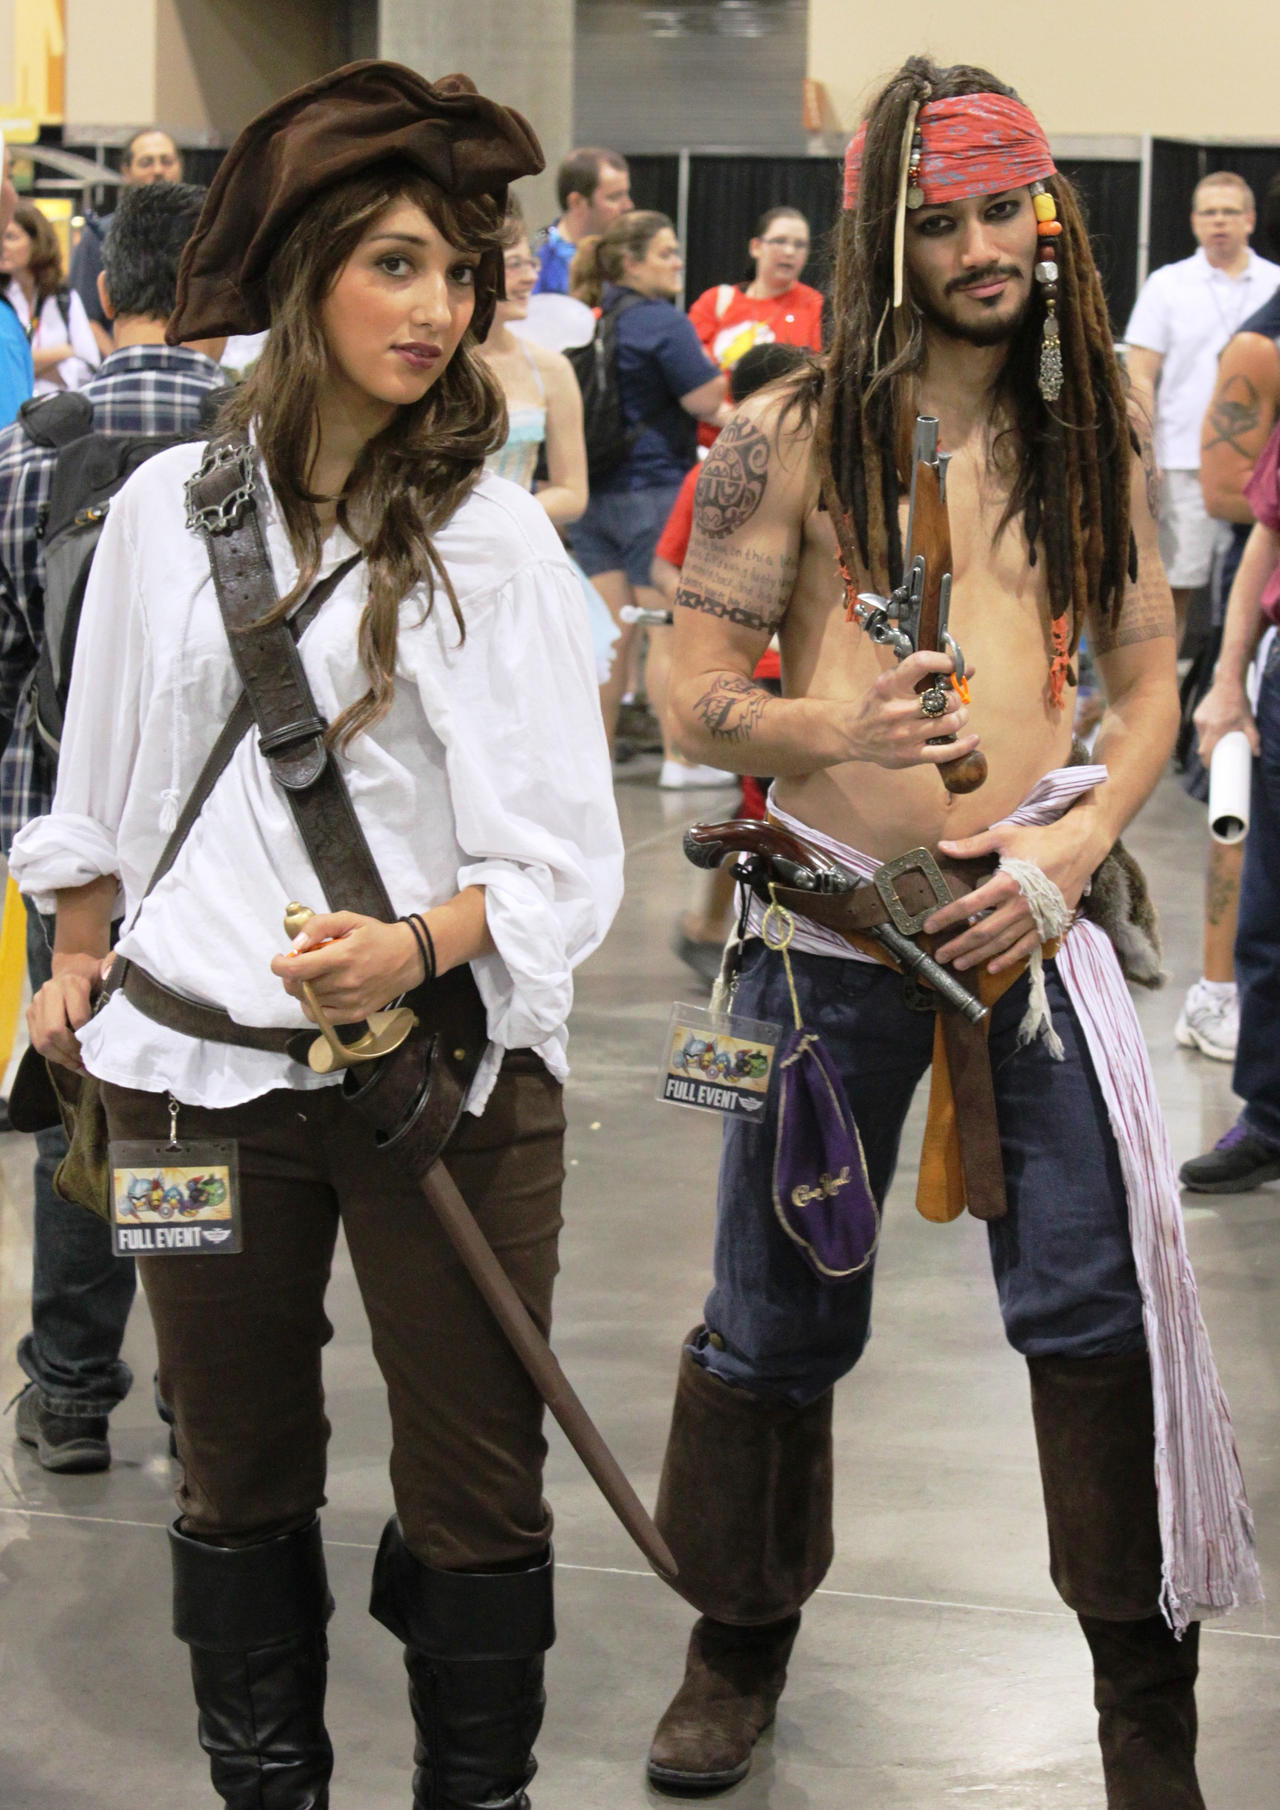 Cap'n Jack Sparrow and female pirate by Katsnake on DeviantArt